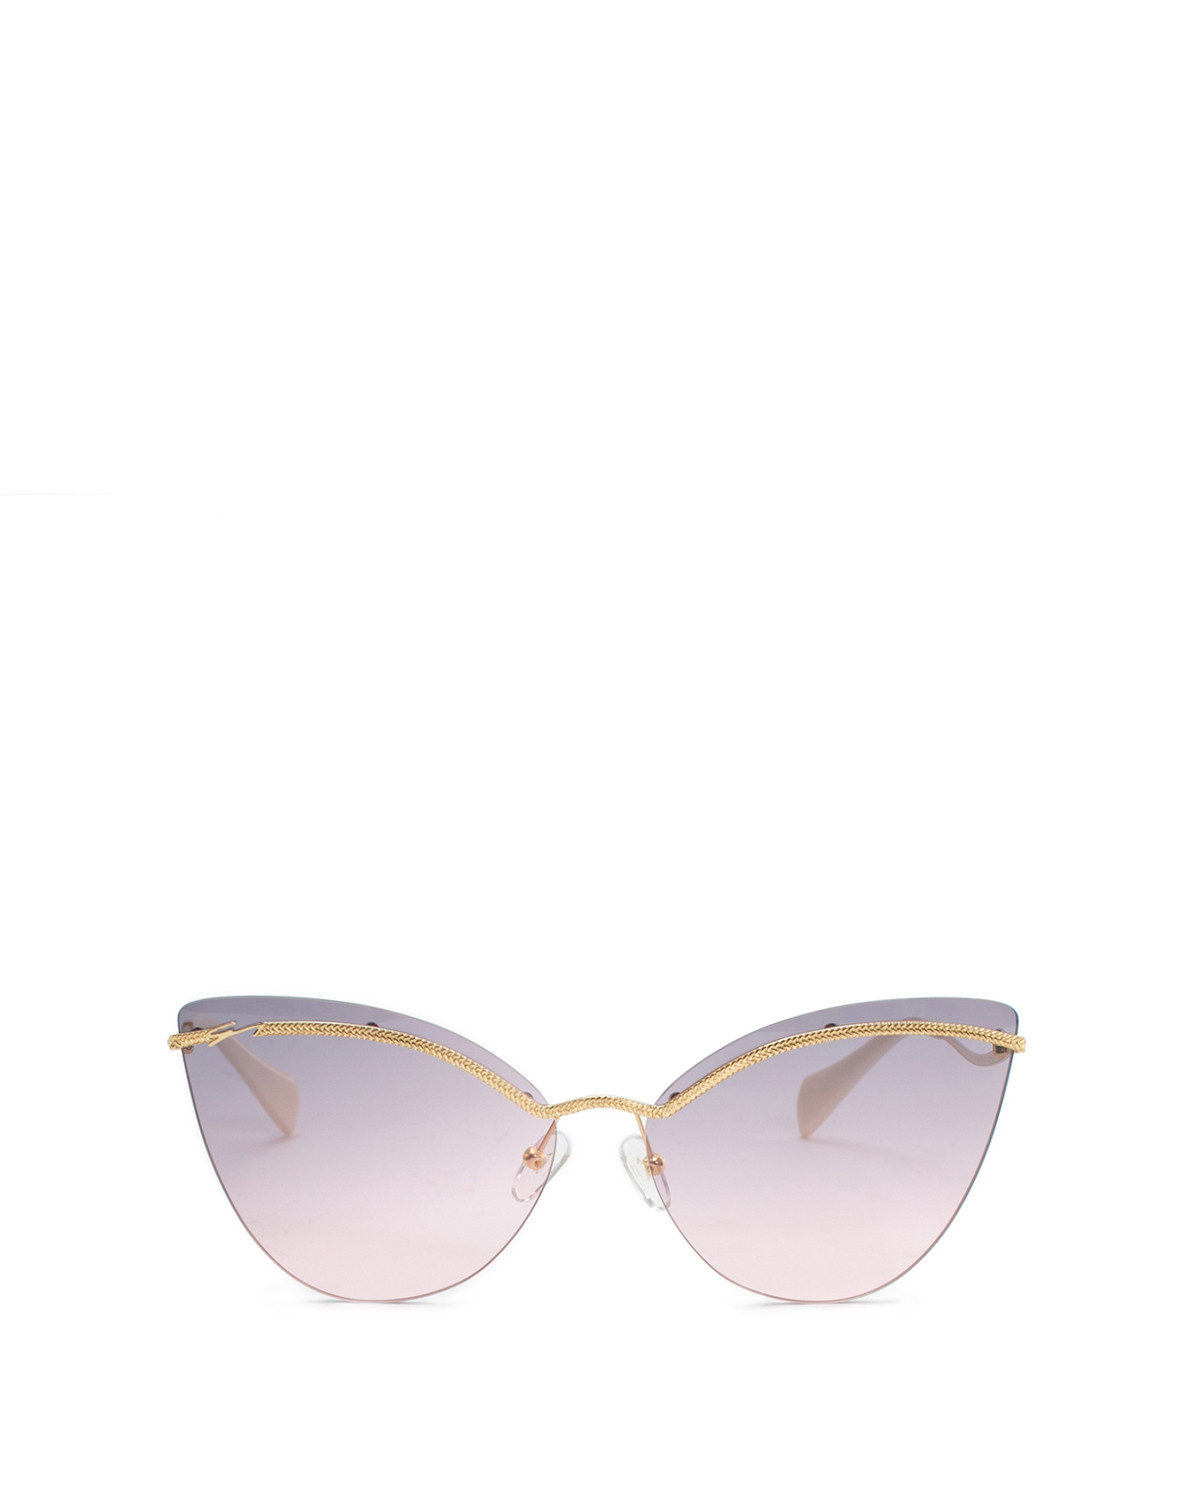 Gold cat-eye sunglasses